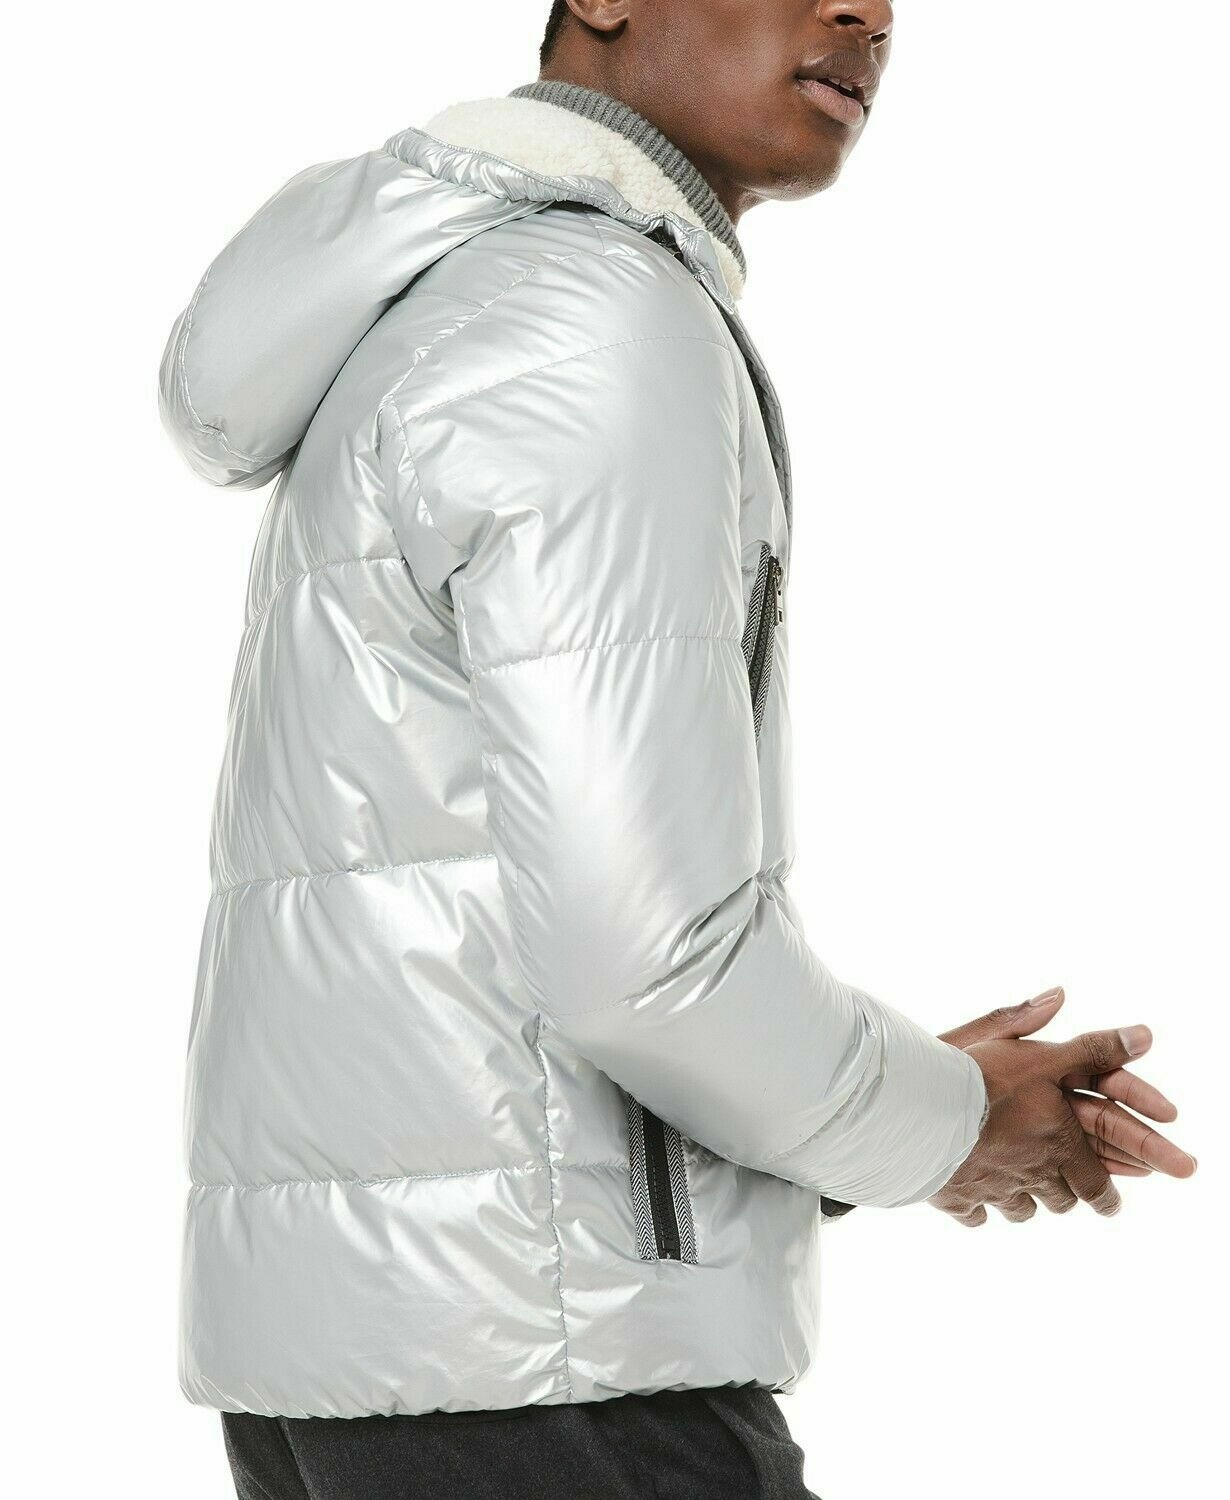 Michael Kors SILVER Metallic Puffer Jacket, US Small - image 5 of 9